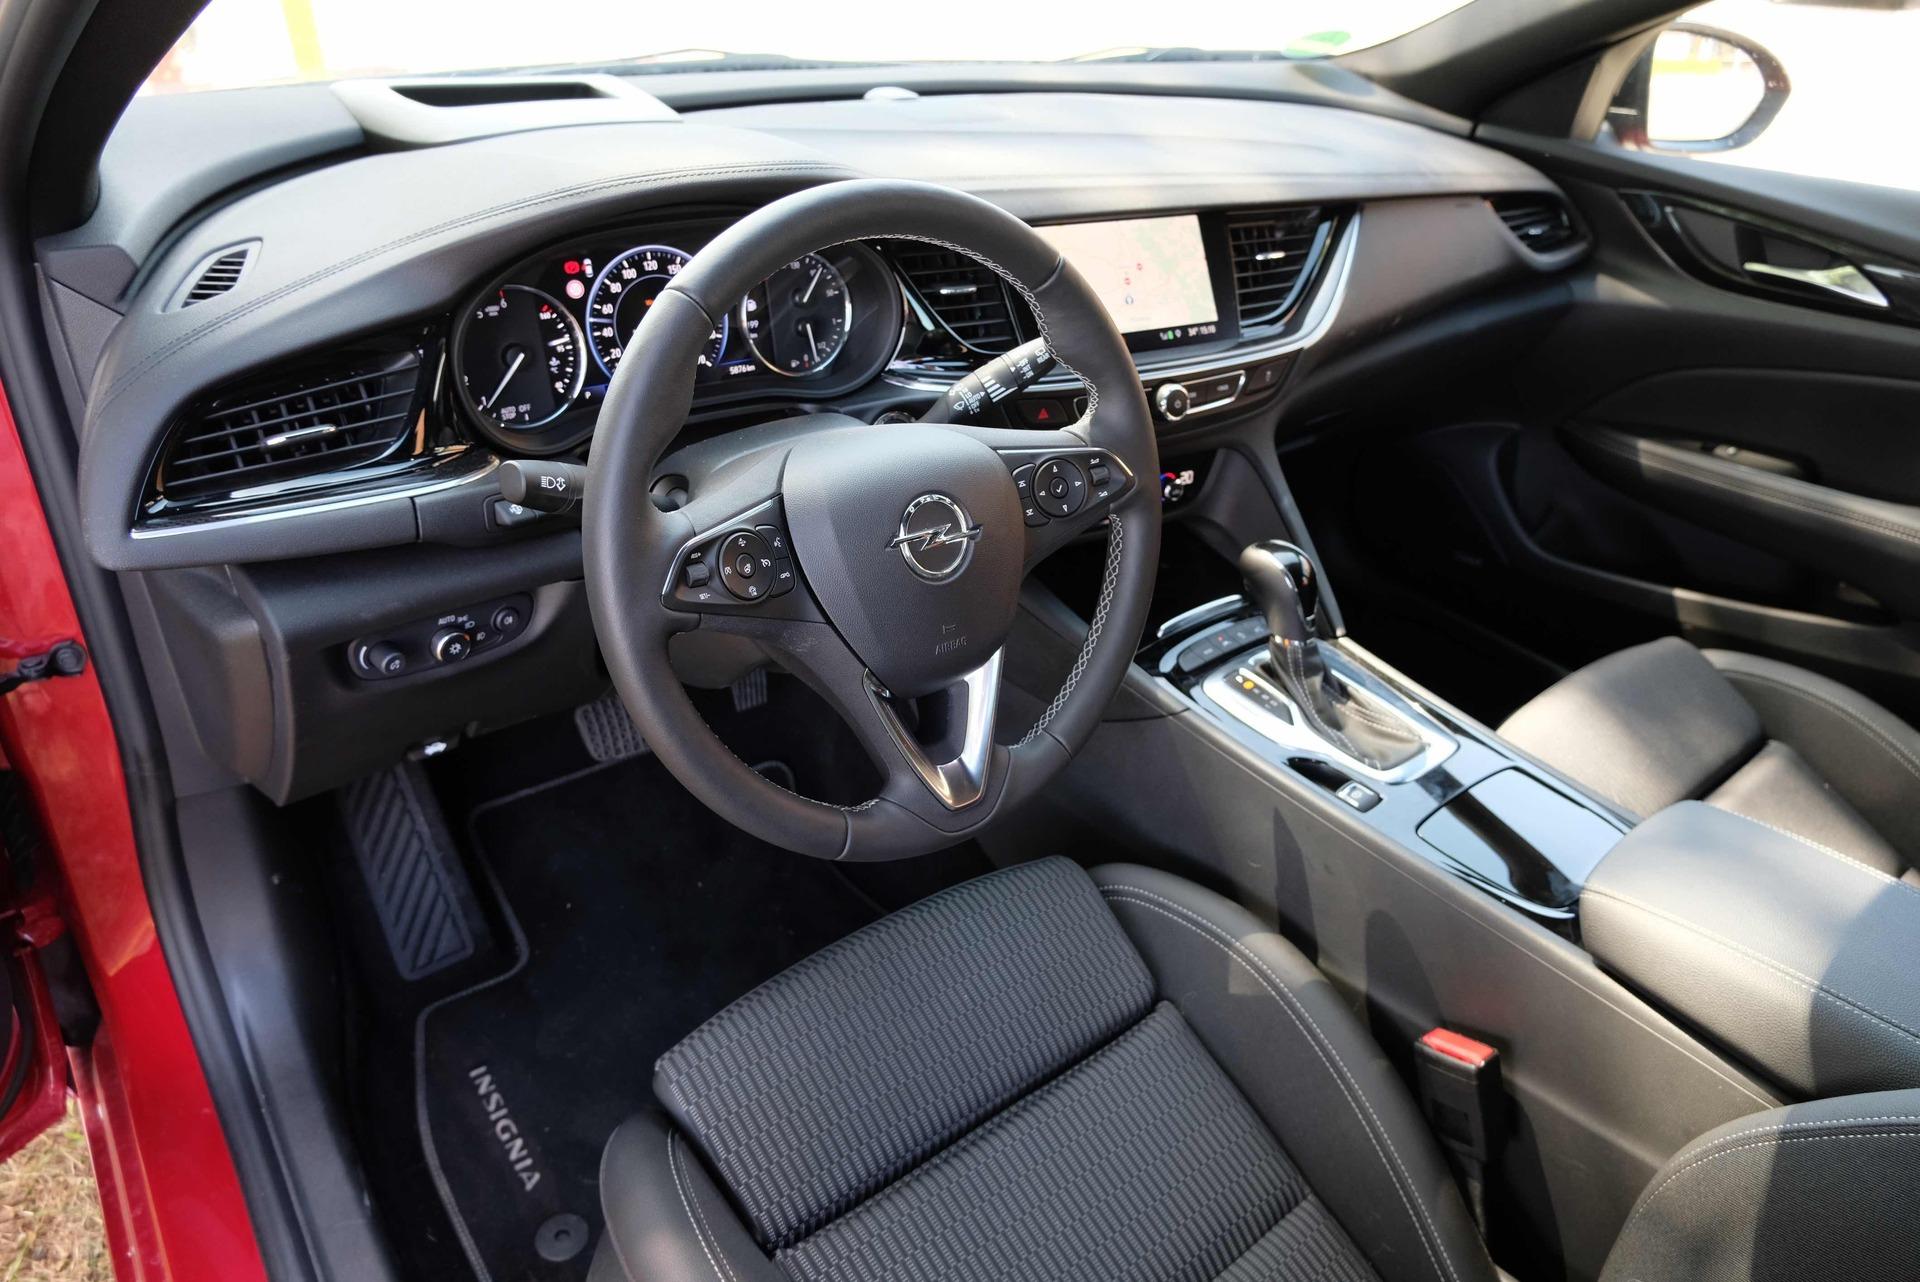 Neuer Opel Insignia: Adaptives Scheinwerfersystem mit 9